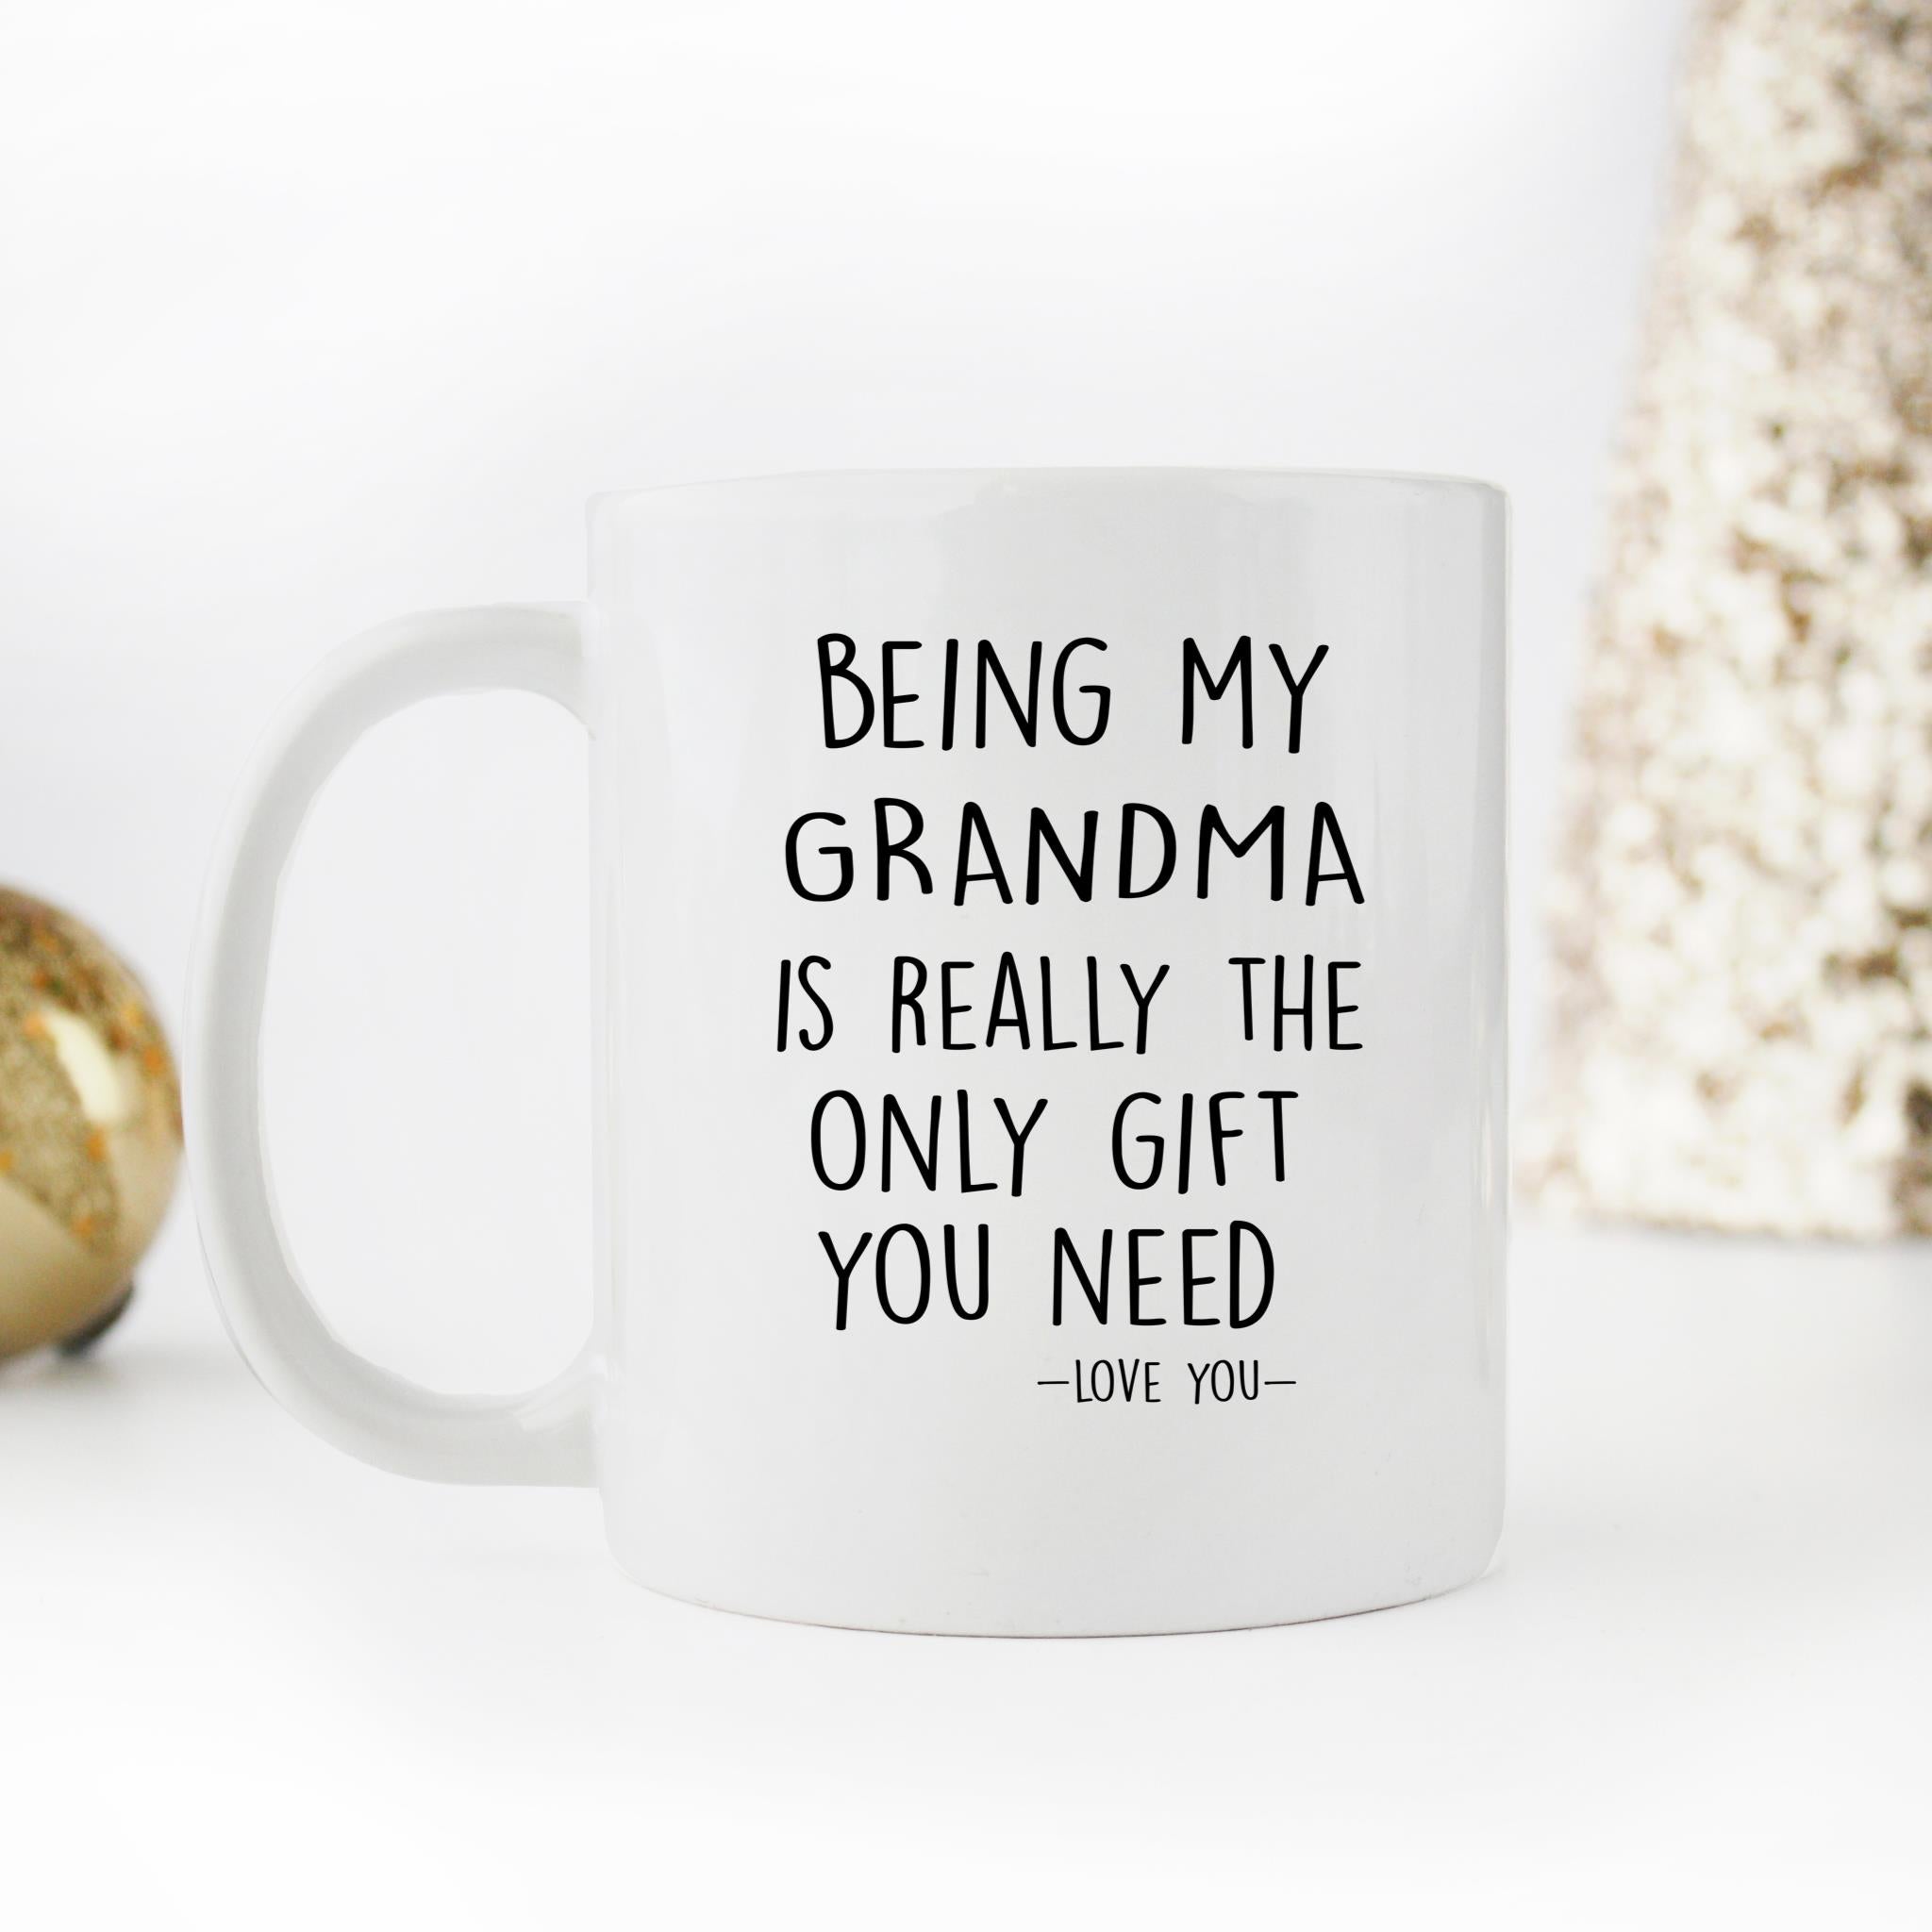 Skitongifts Funny Ceramic Novelty Coffee Mug Being My Grandma Is Really The Only Gift You Need - Love You Grandma Funny Gift yhBAU1U